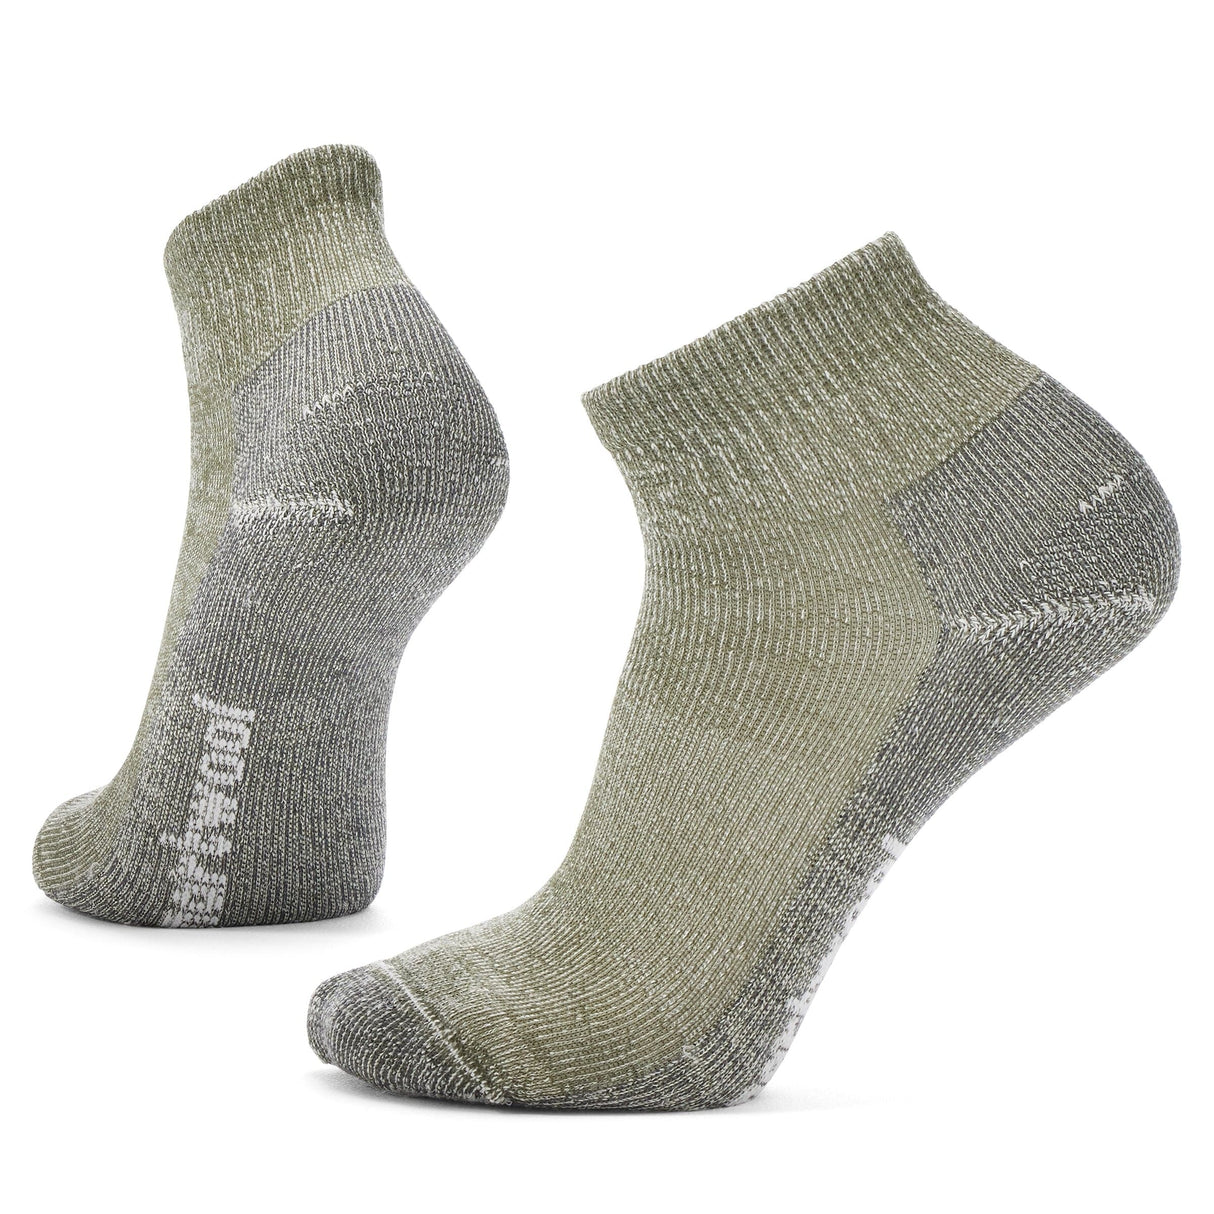 Smartwool Hike Classic Edition Ankle Socks  -  Medium / Military Olive